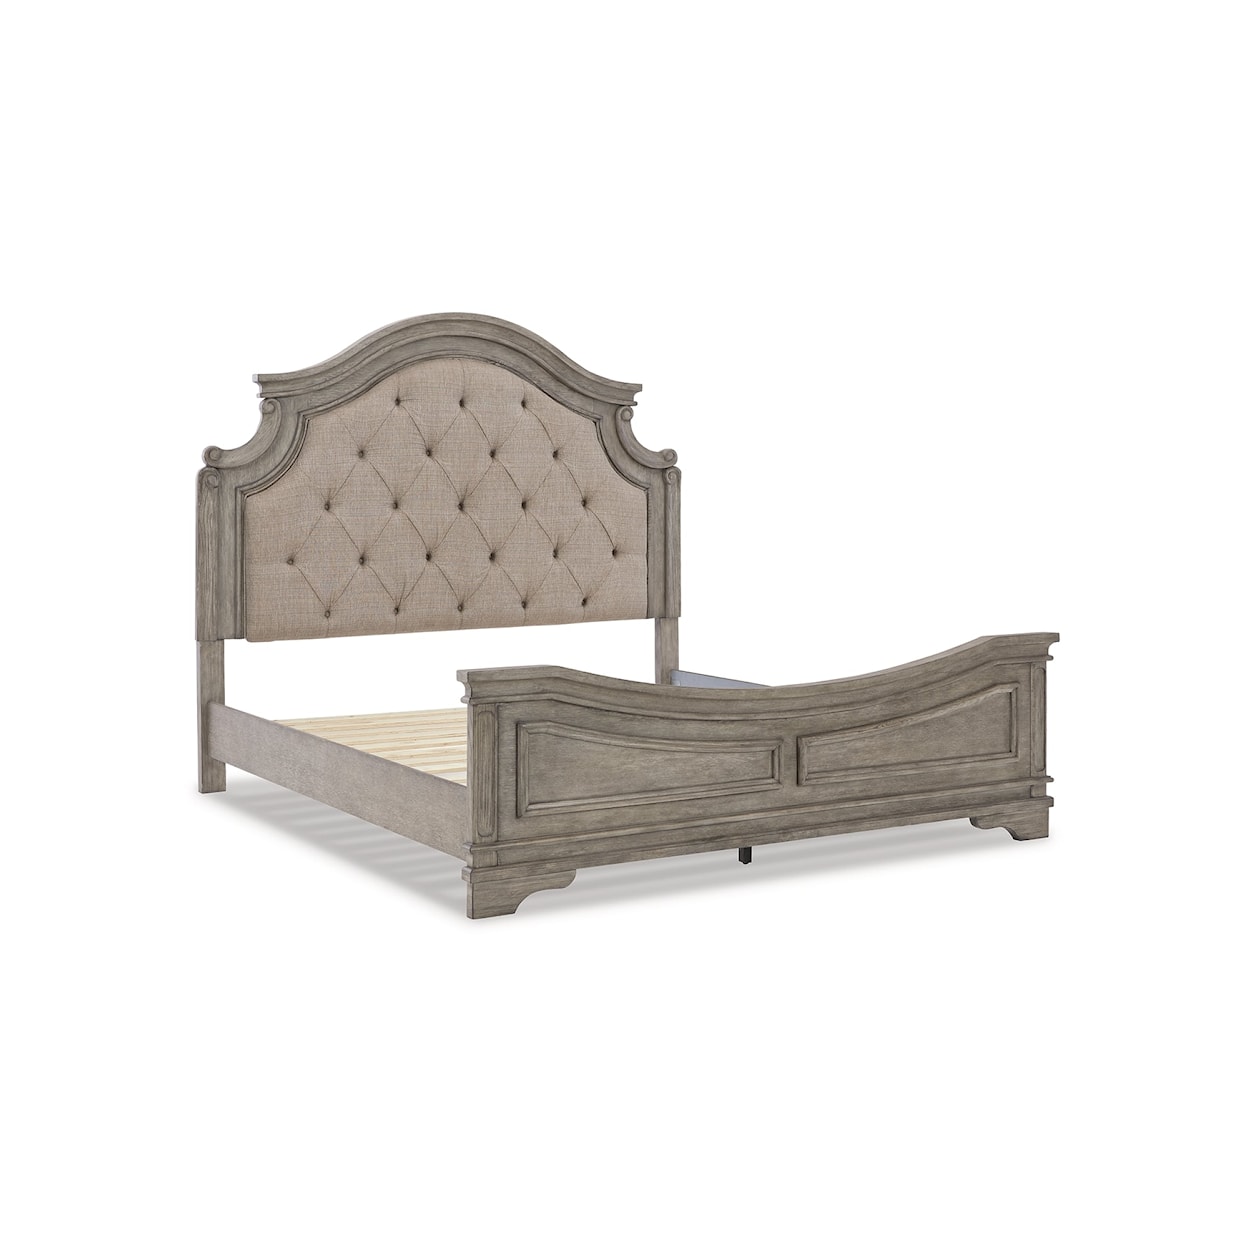 Ashley Furniture Signature Design Lodenbay King Panel Bed